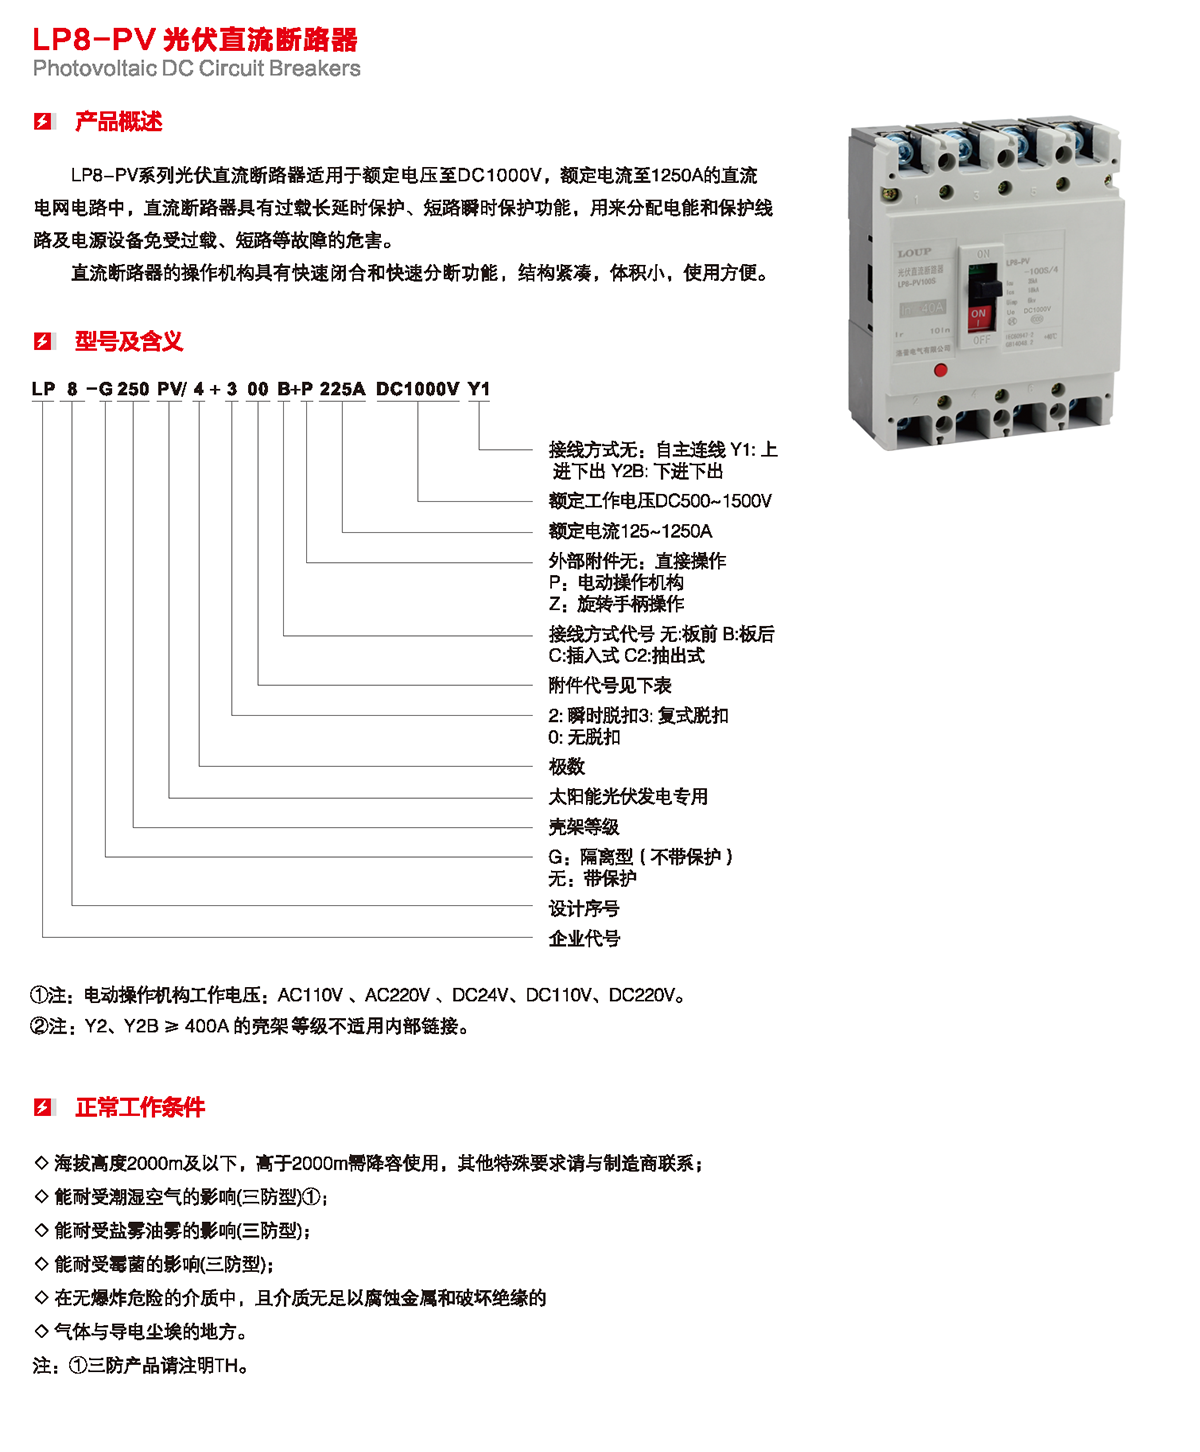 LP8-PV 光伏直流断路器产品概述、型号含义、正常工作条件